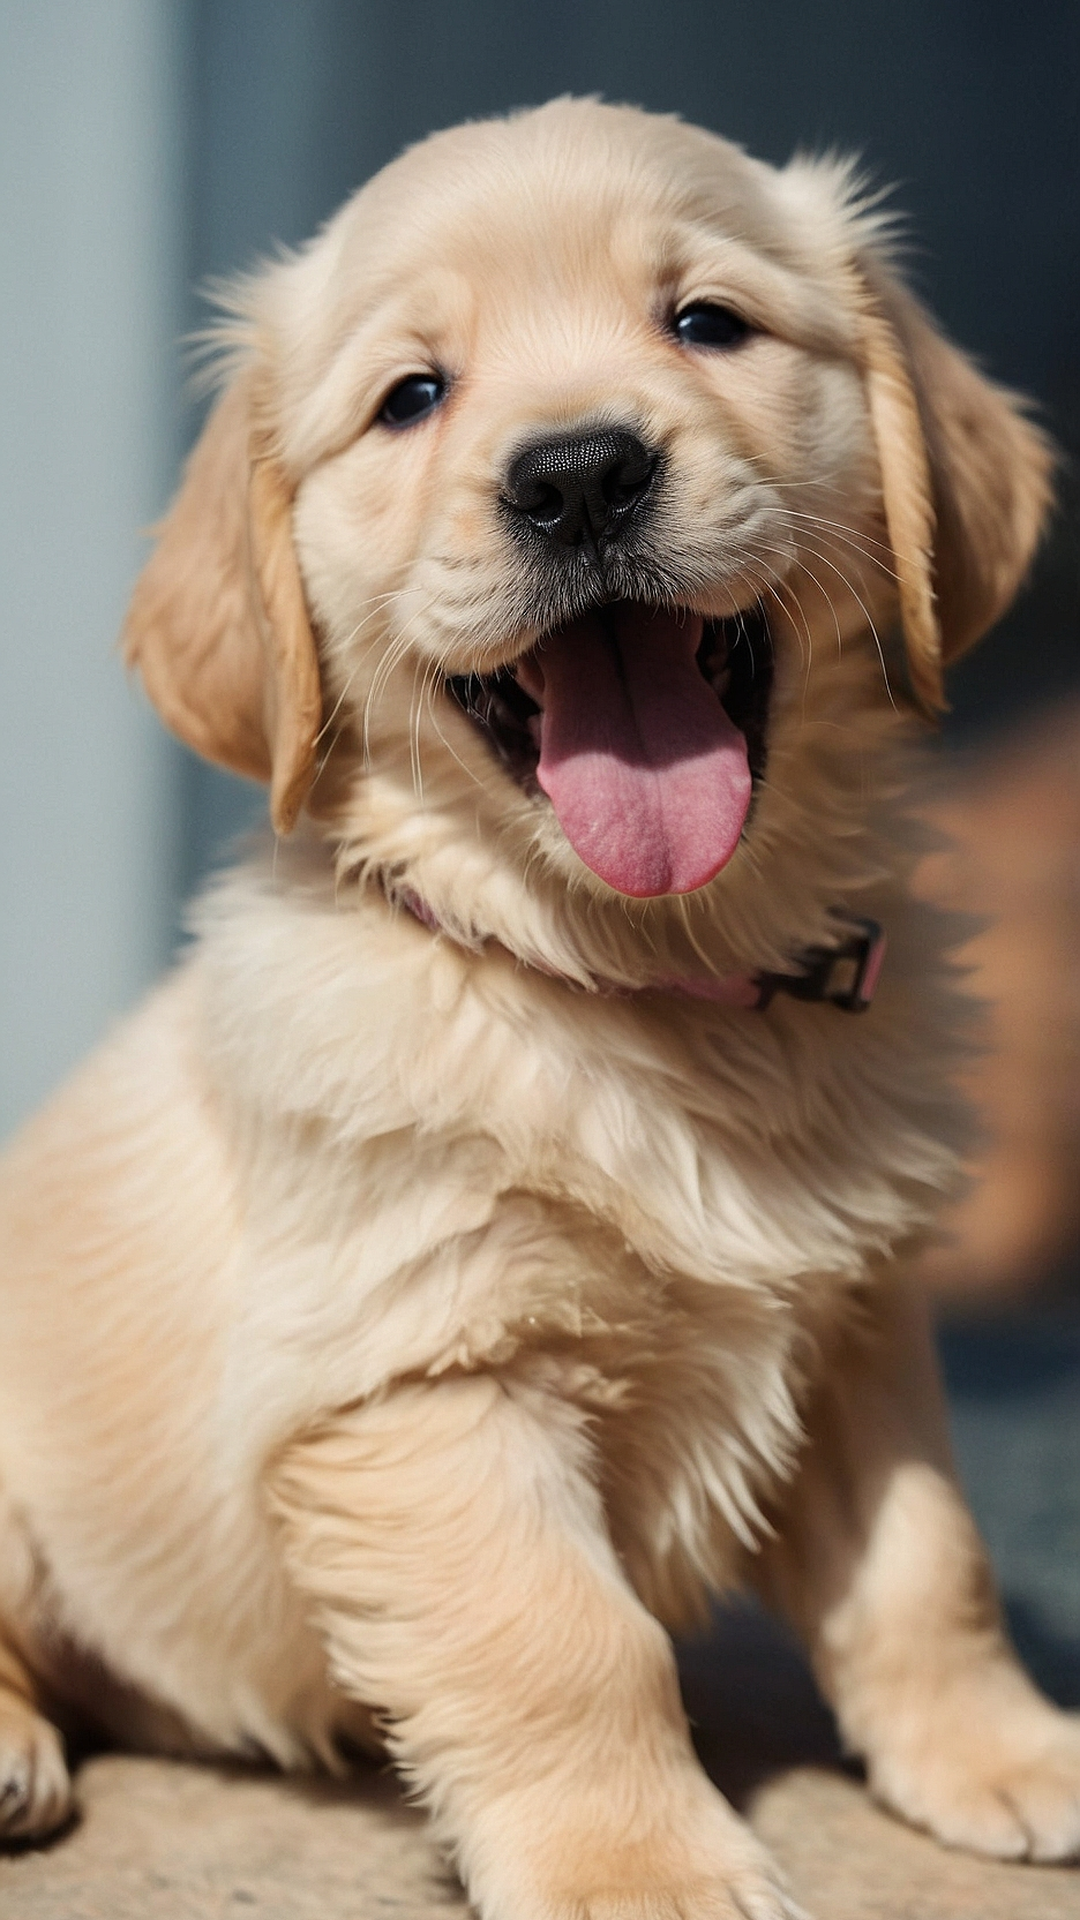 Bundle of Joy: Cute Puppies Bringing Happiness